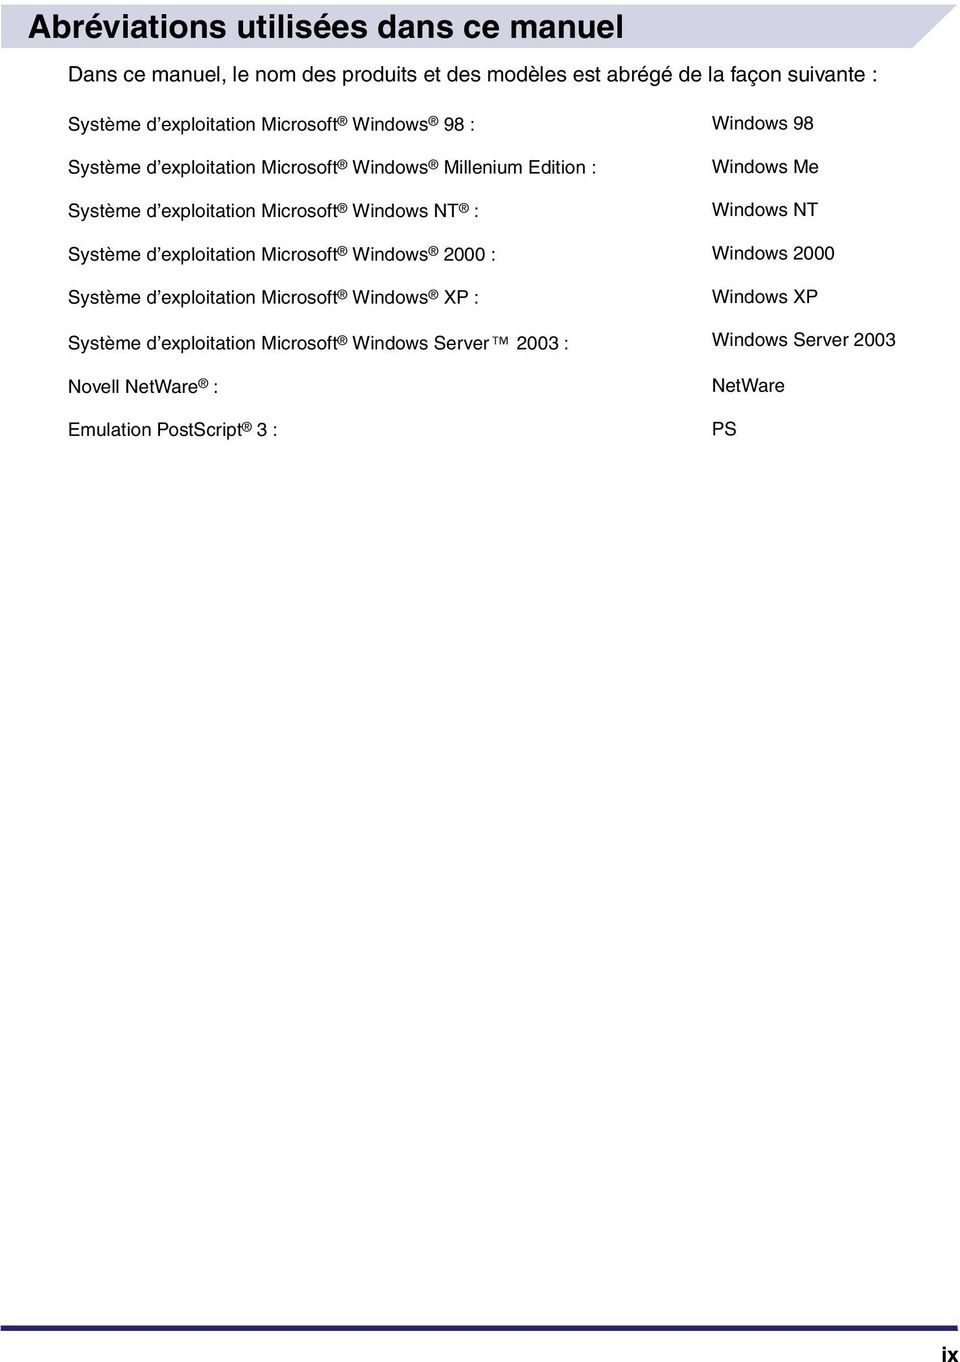 Microsoft Windows NT : Windows Me Windows NT Système d exploitation Microsoft Windows 2000 : Windows 2000 Système d exploitation Microsoft